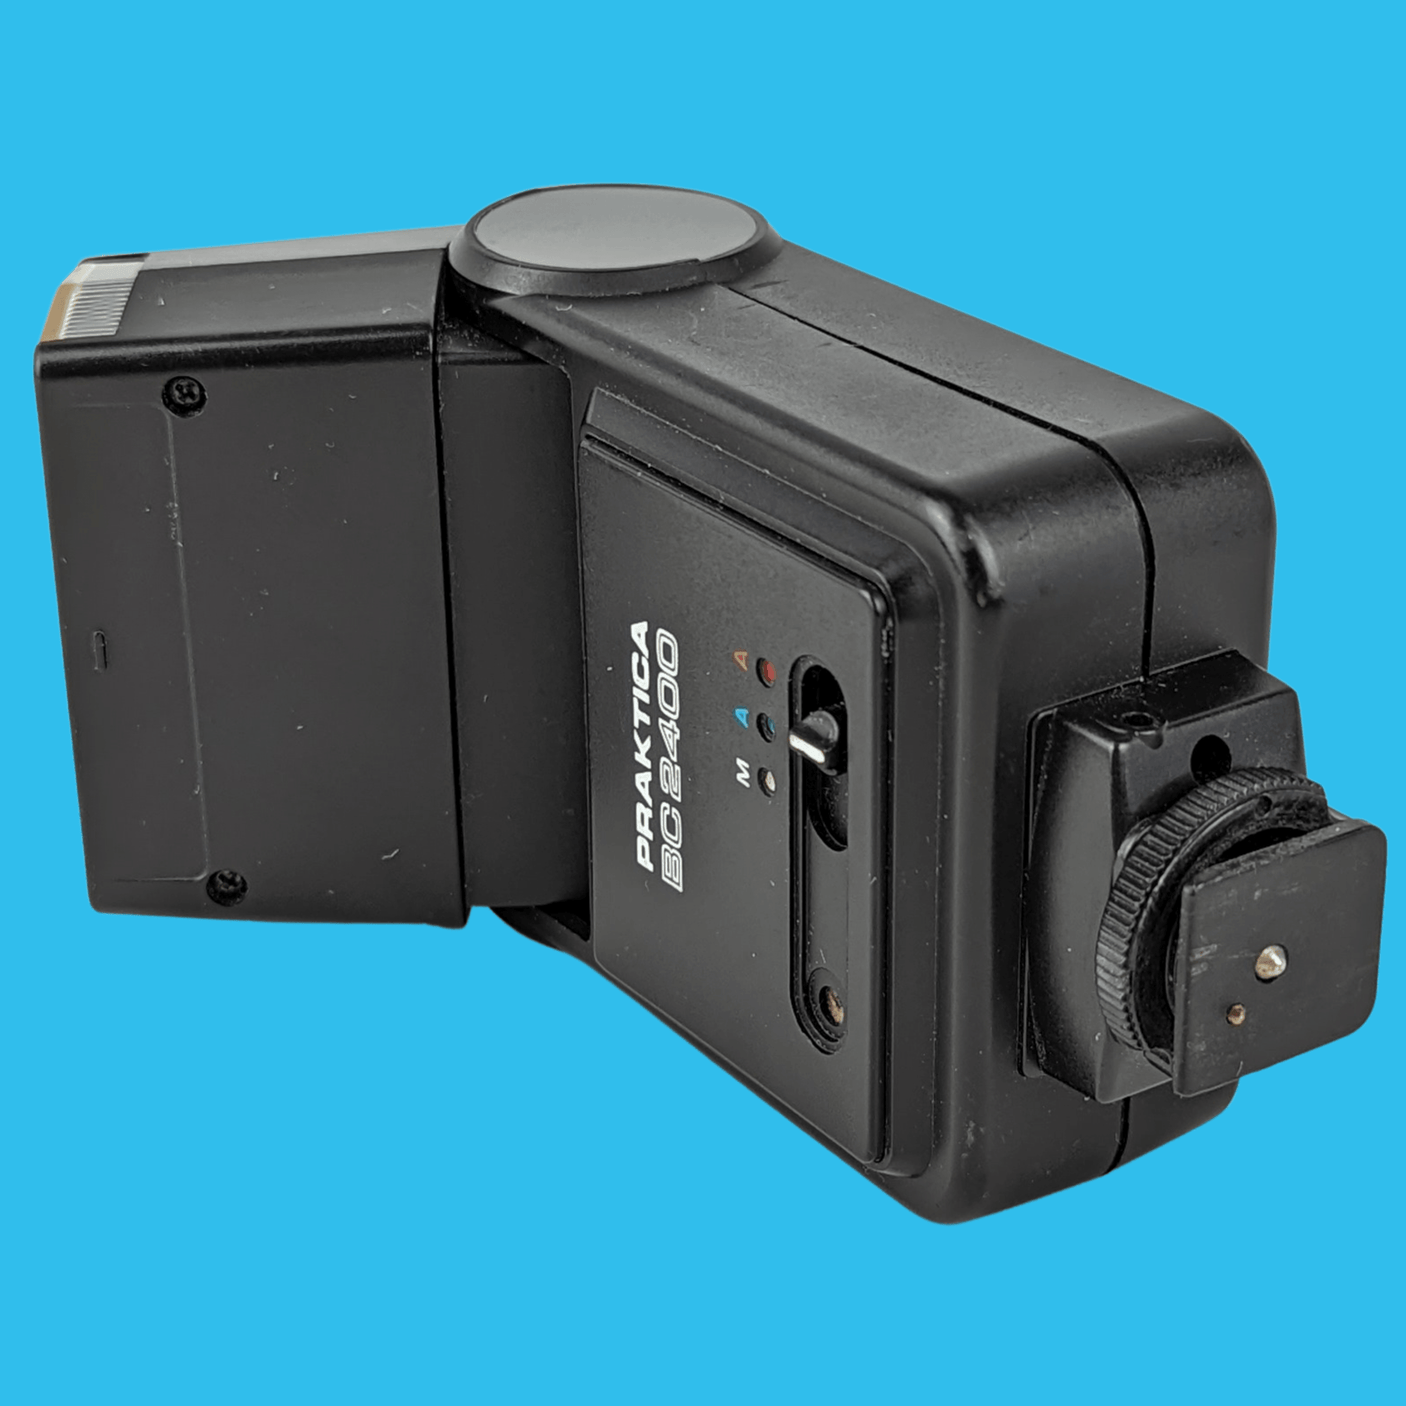 Praktica BC2400 External Flash Unit for 35mm Film Camera